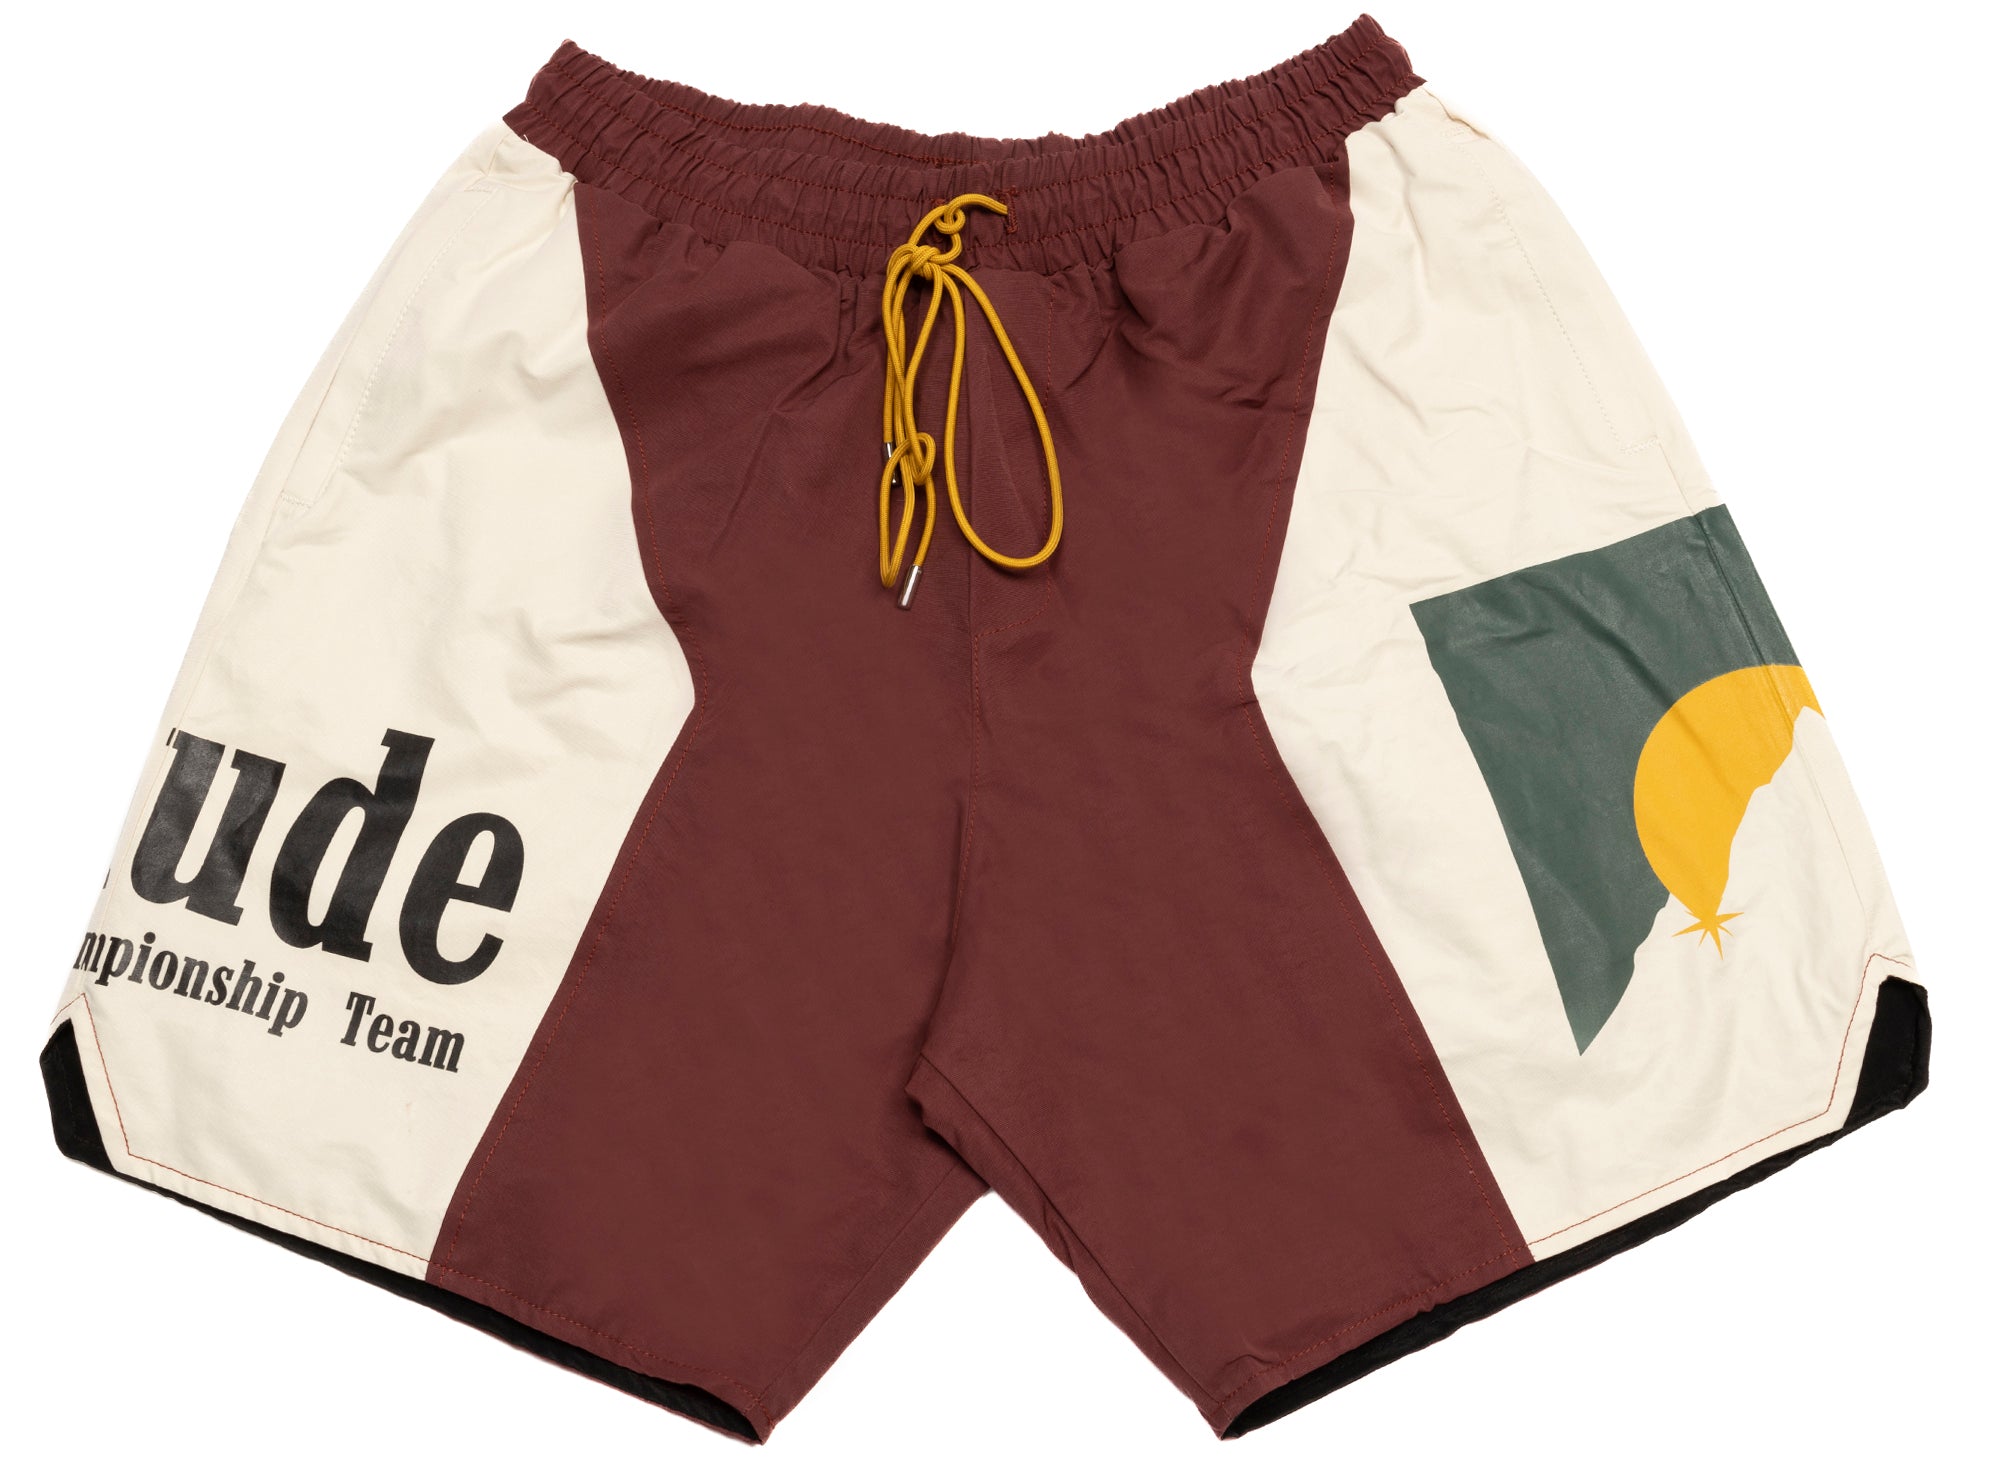 NWT Rhude Card Print Swim Shorts Men's Medium Maroon Red Authentic MSRP  $400